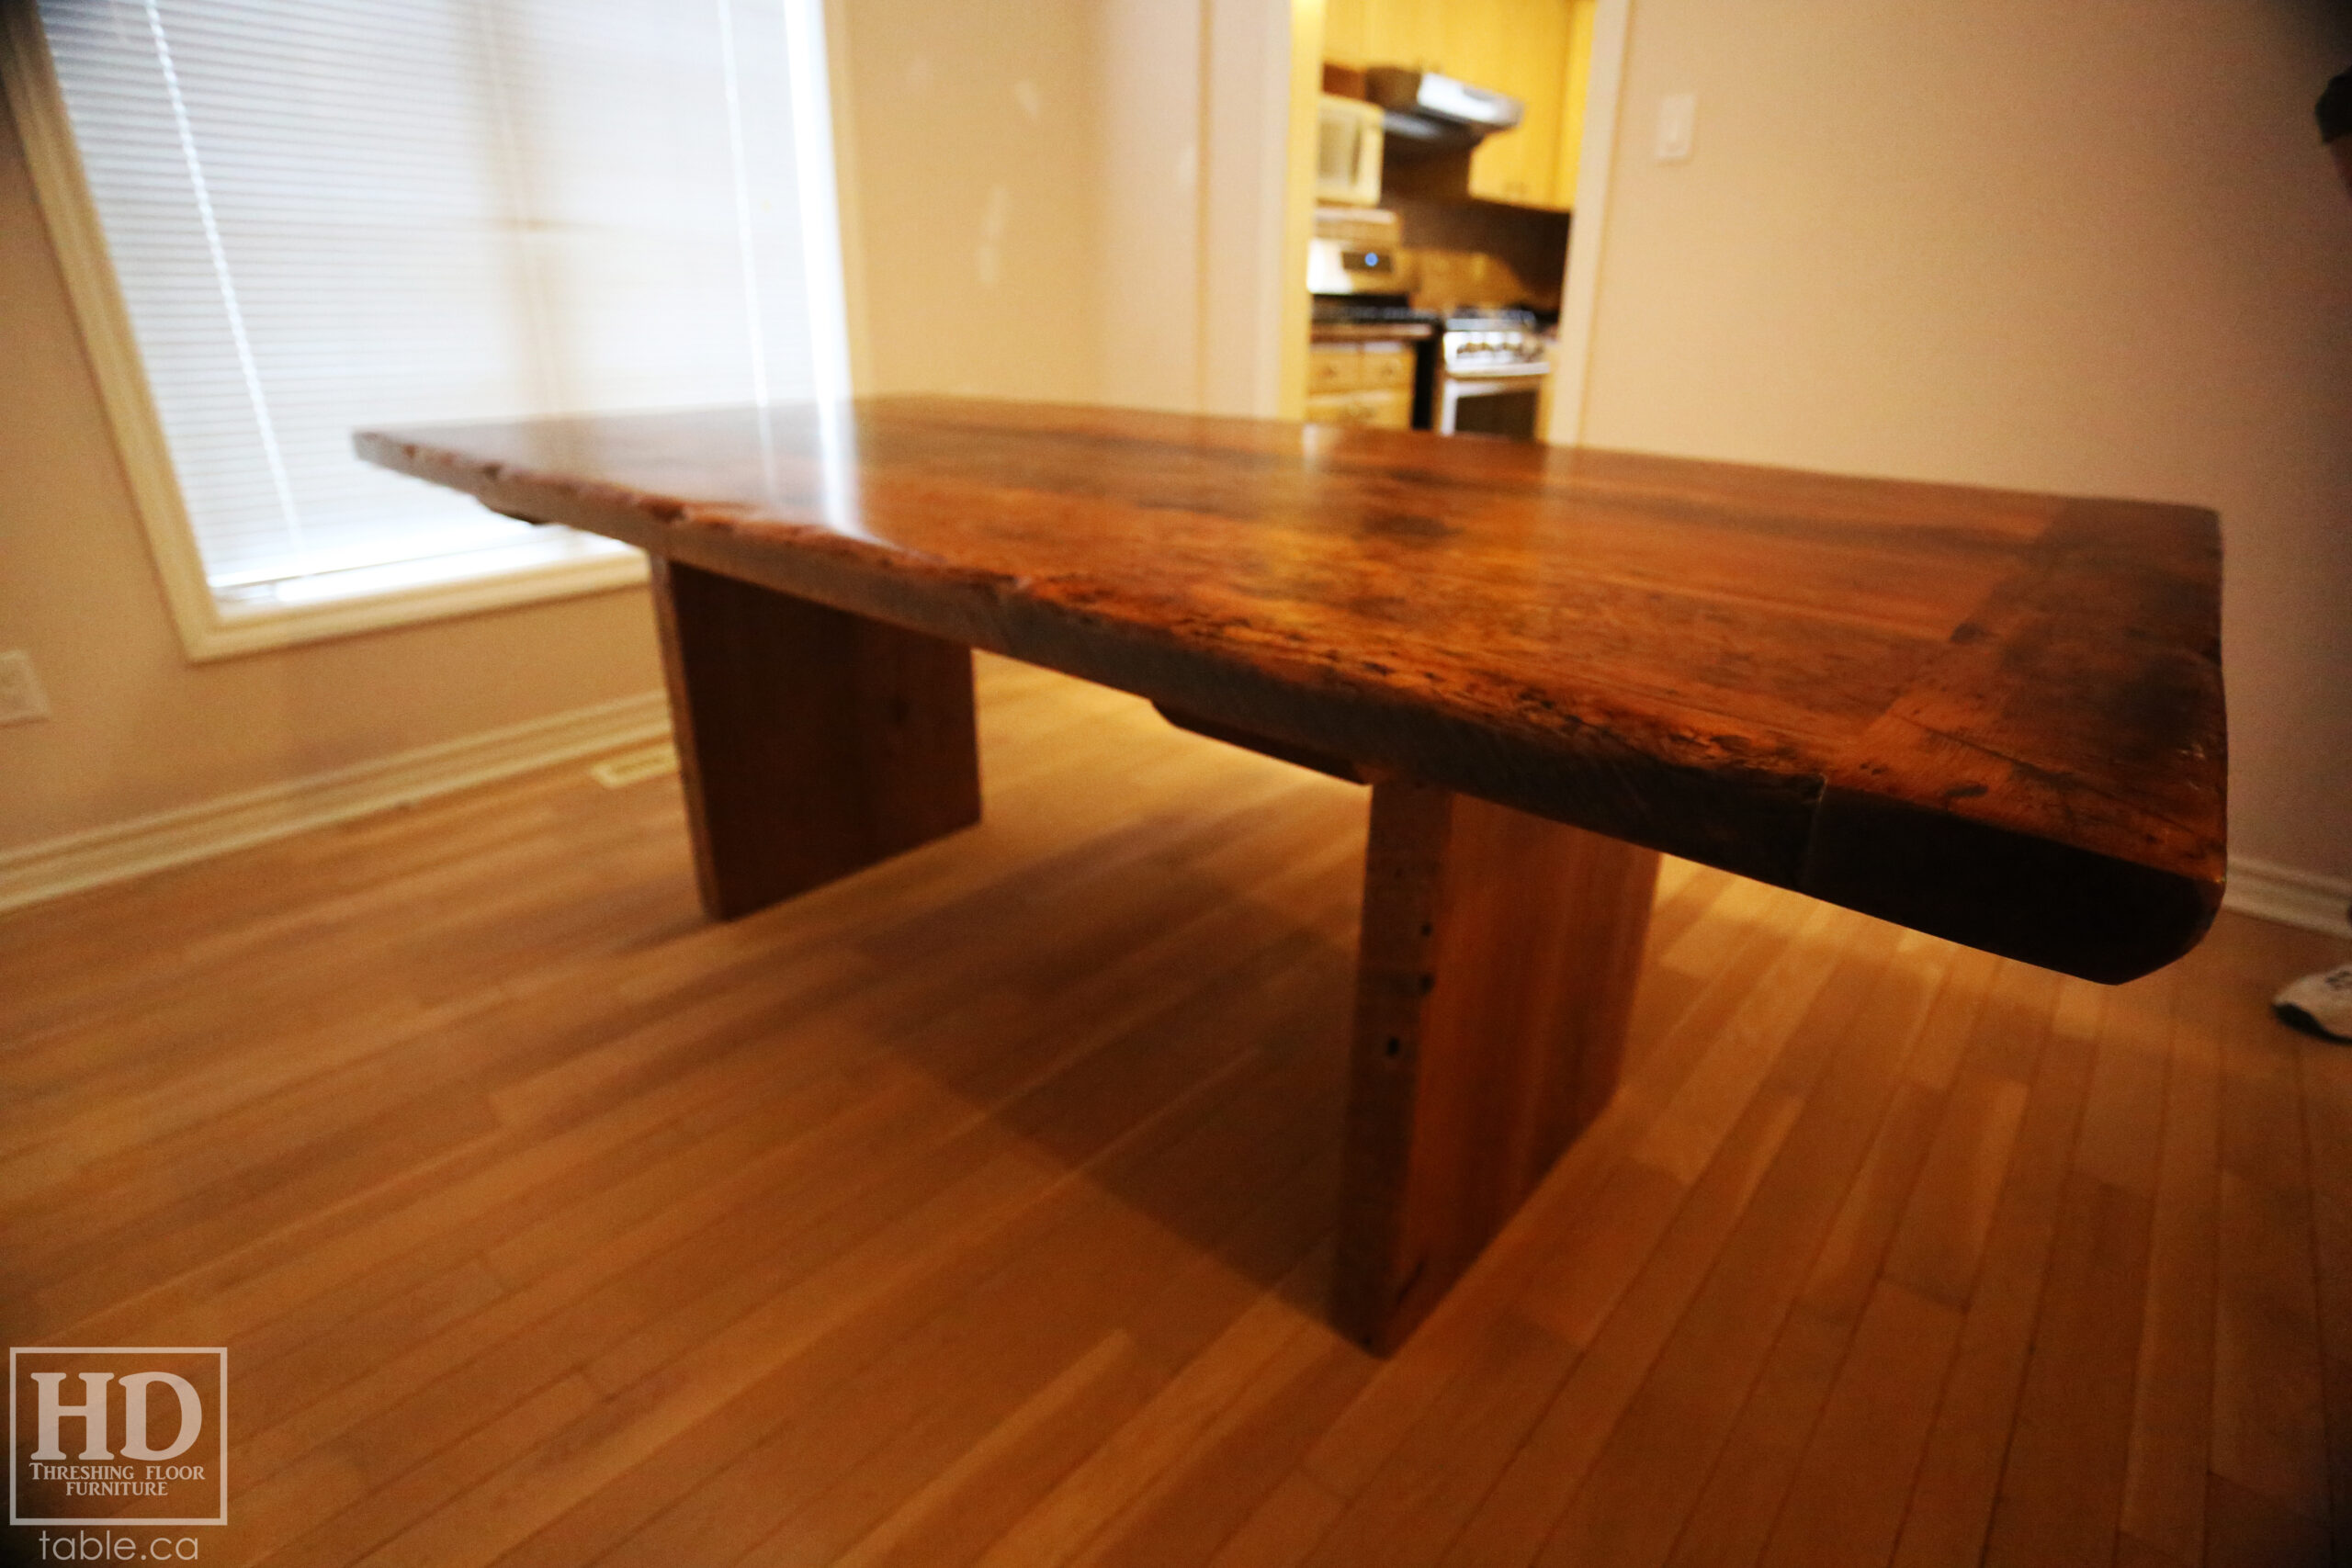 Modern Reclaimed Wood Table by HD Threshing Floor Furniture / www.table.ca